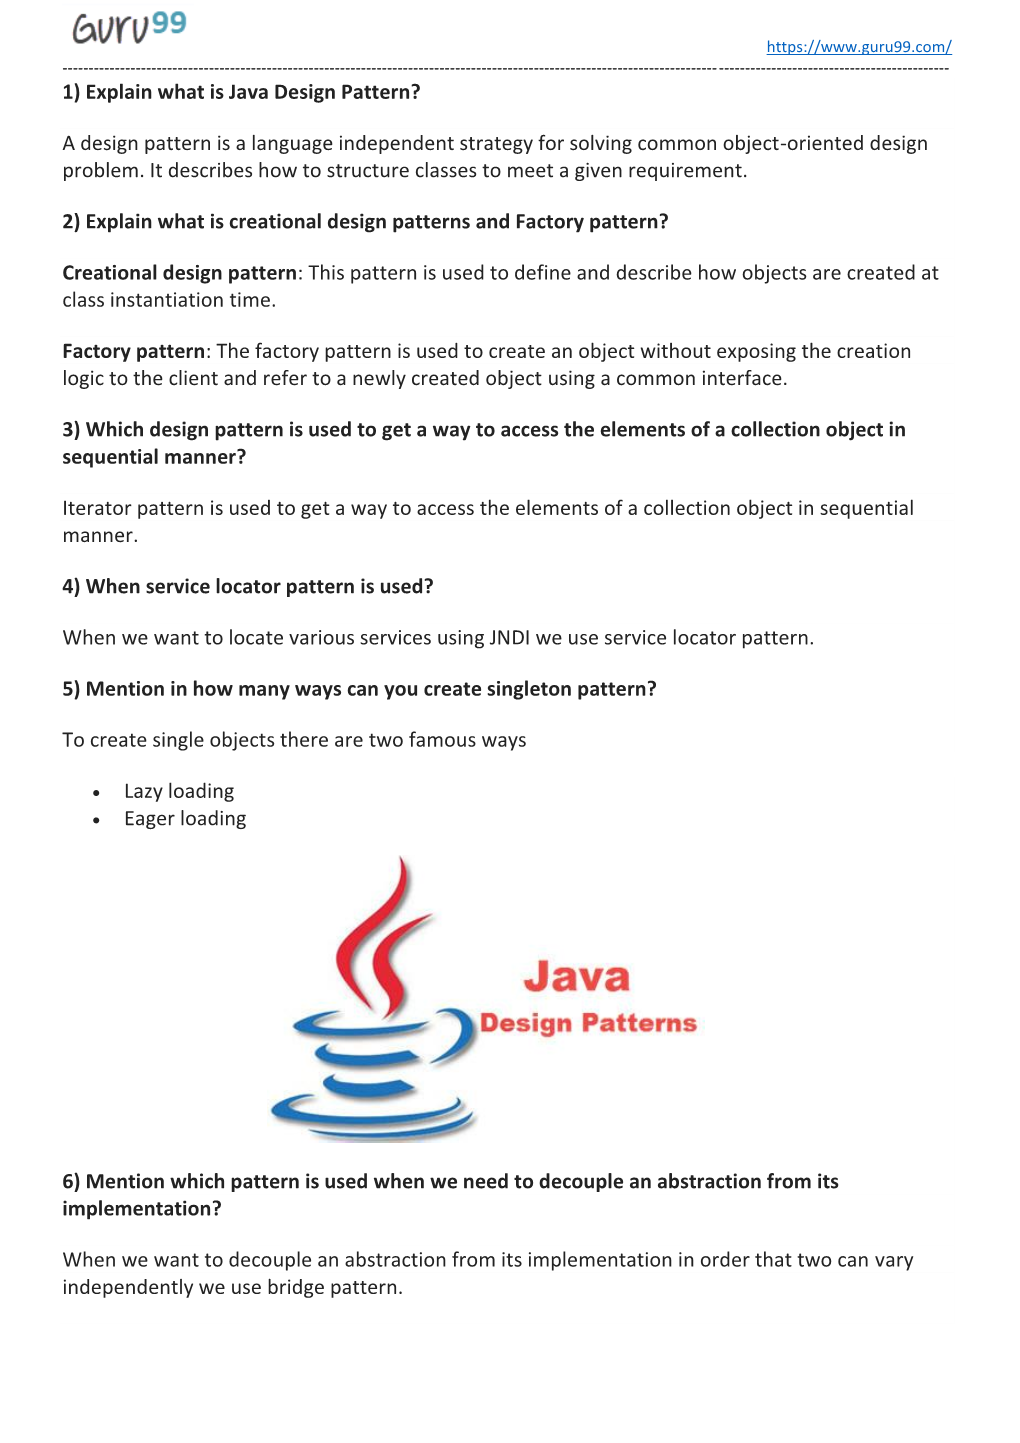 1) Explain What Is Java Design Pattern?